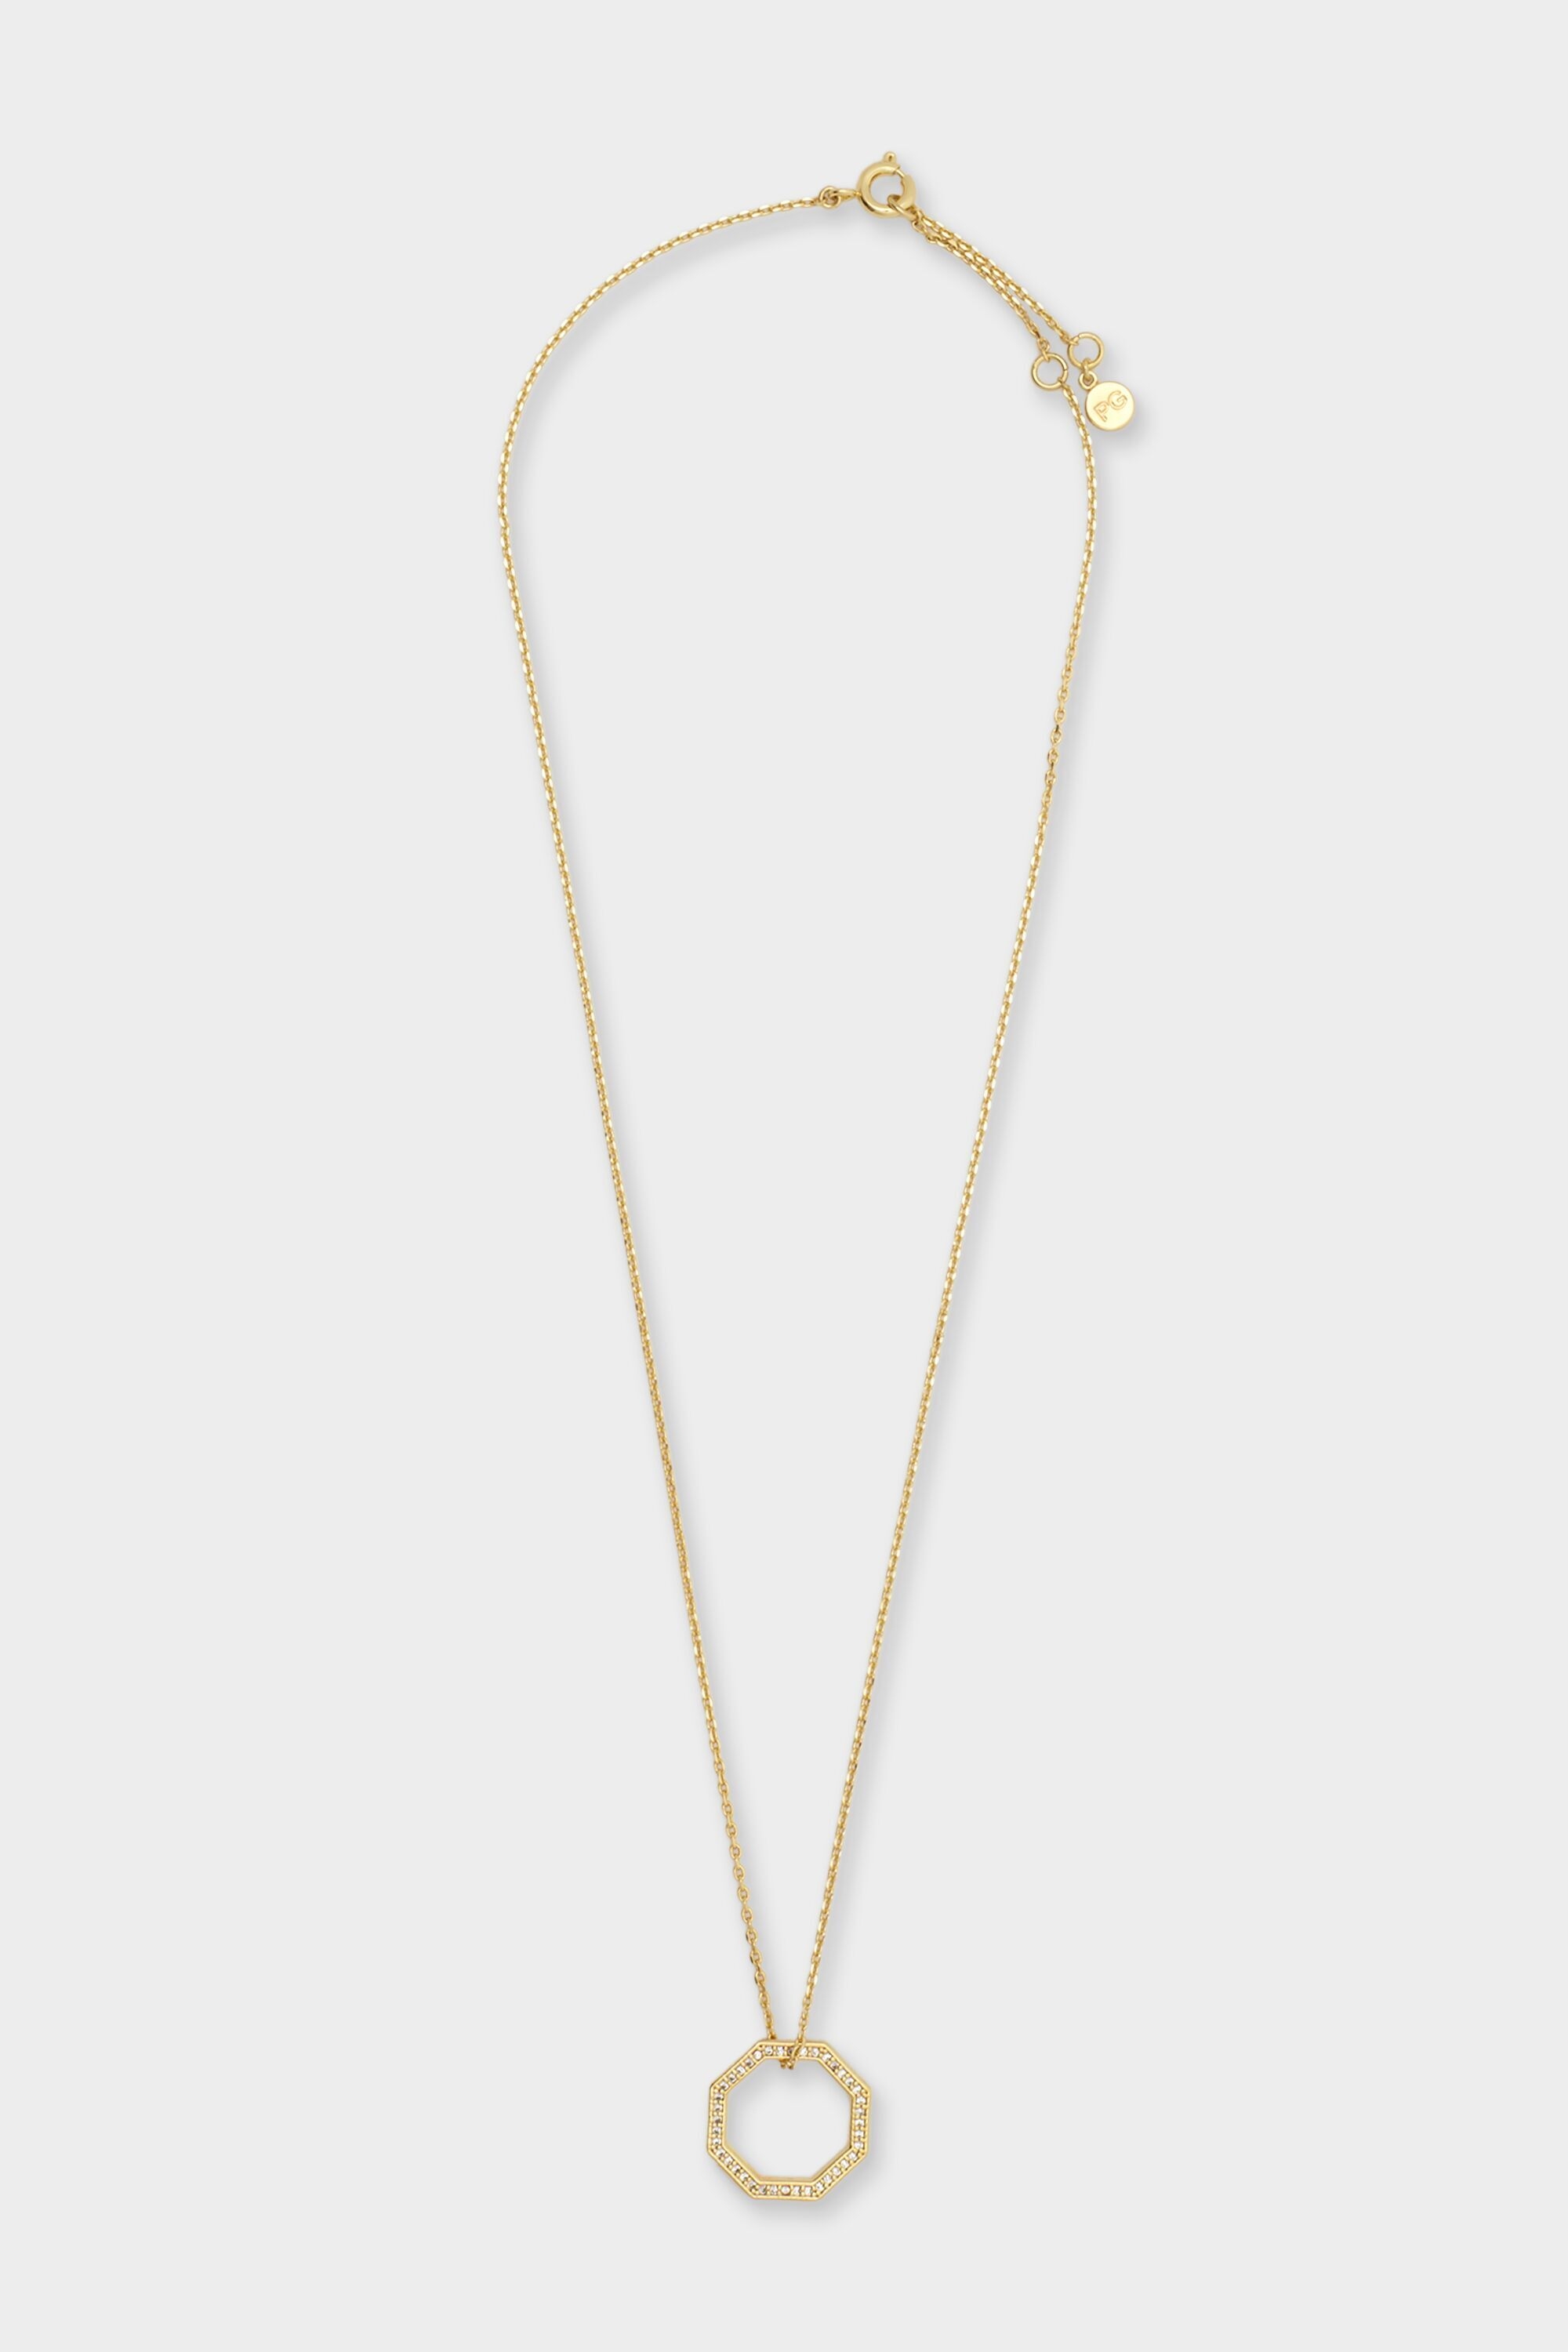 Octagon necklace